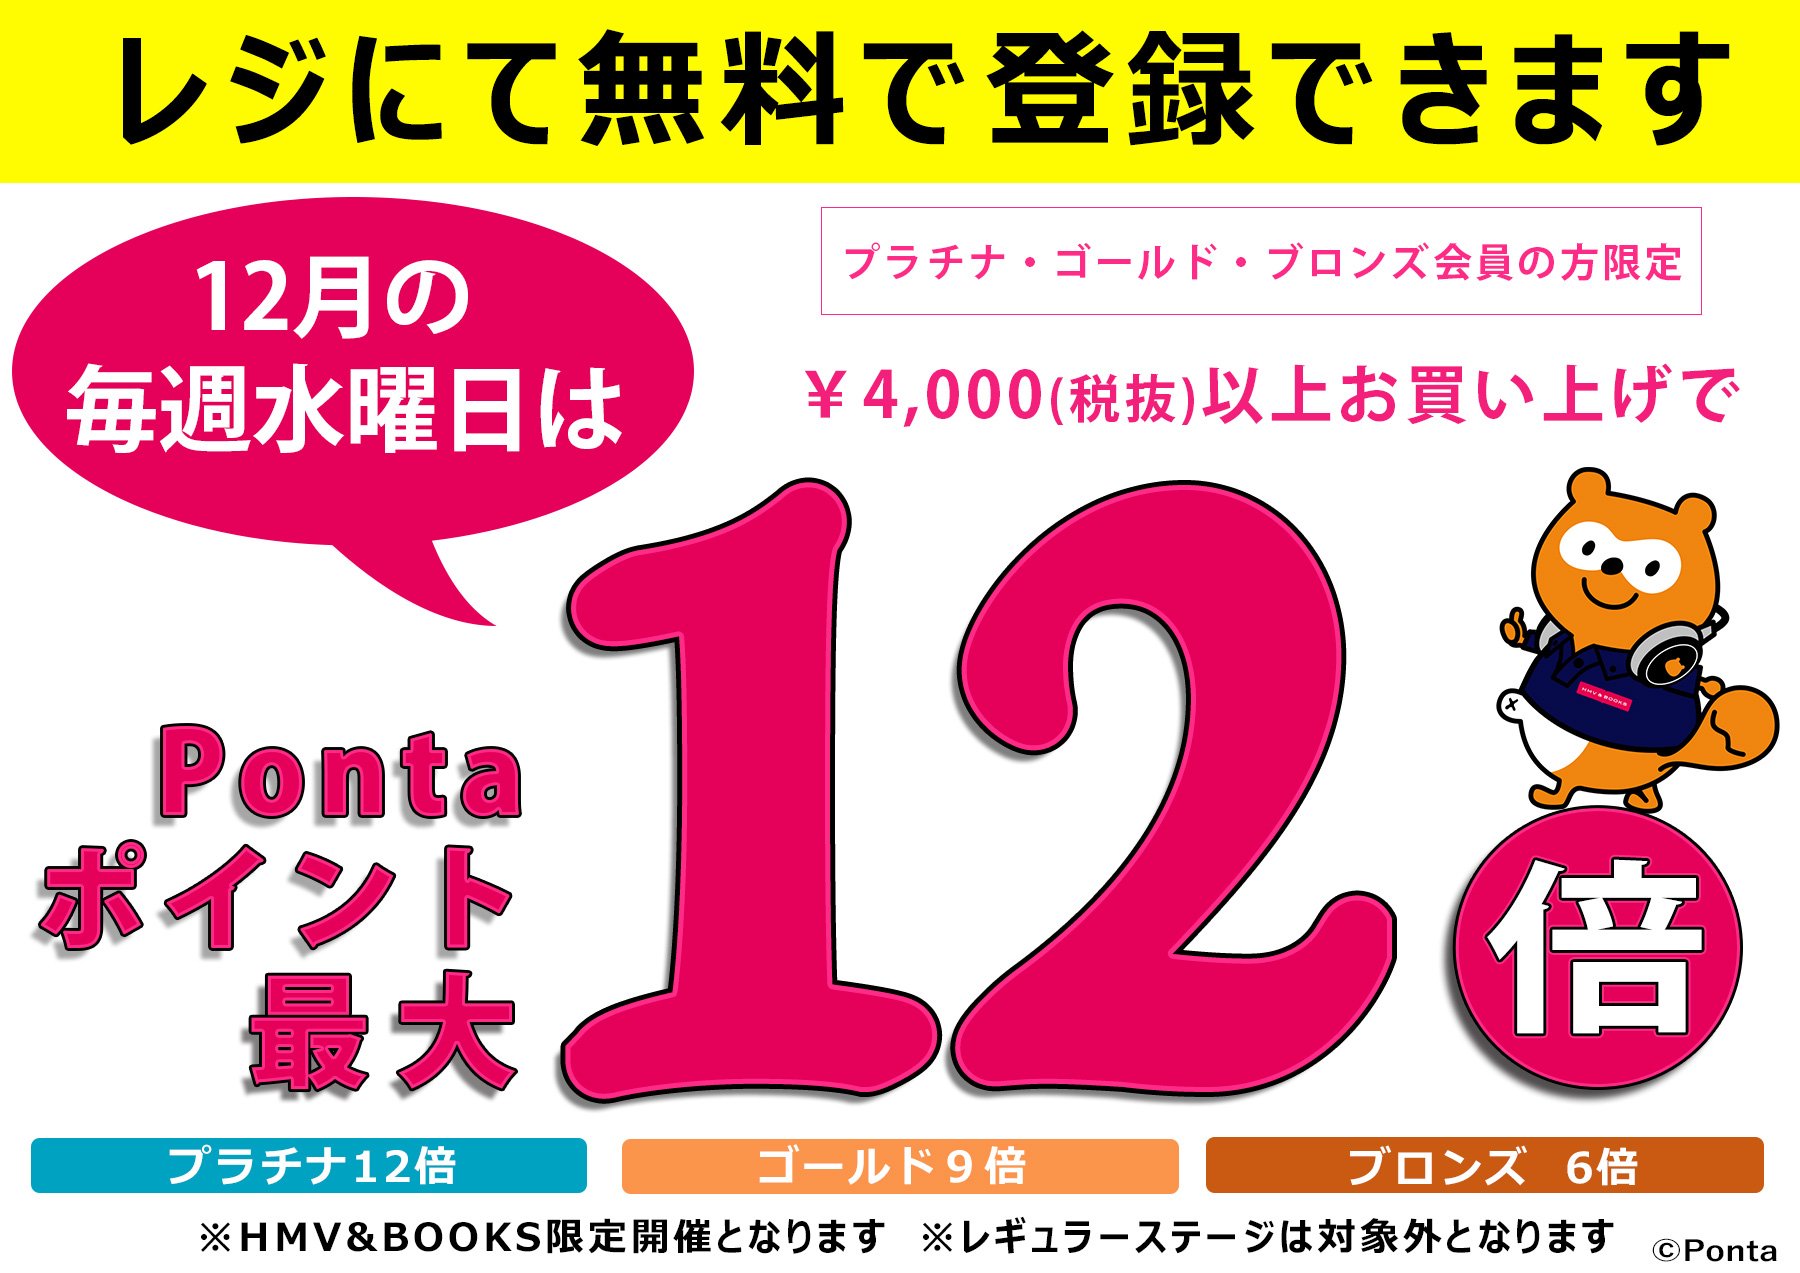 Uzivatel Hmv Books Shibuya Na Twitteru 本日ポイントがお得 12月の毎週水曜はpontaポイントサービスデー 4 000 税抜 以上お買い上げでステージ別ポイントサービス プラチナ 12倍 ゴールド 9倍 ブロンズ 6倍 登録まだの方も無料でその場で出来